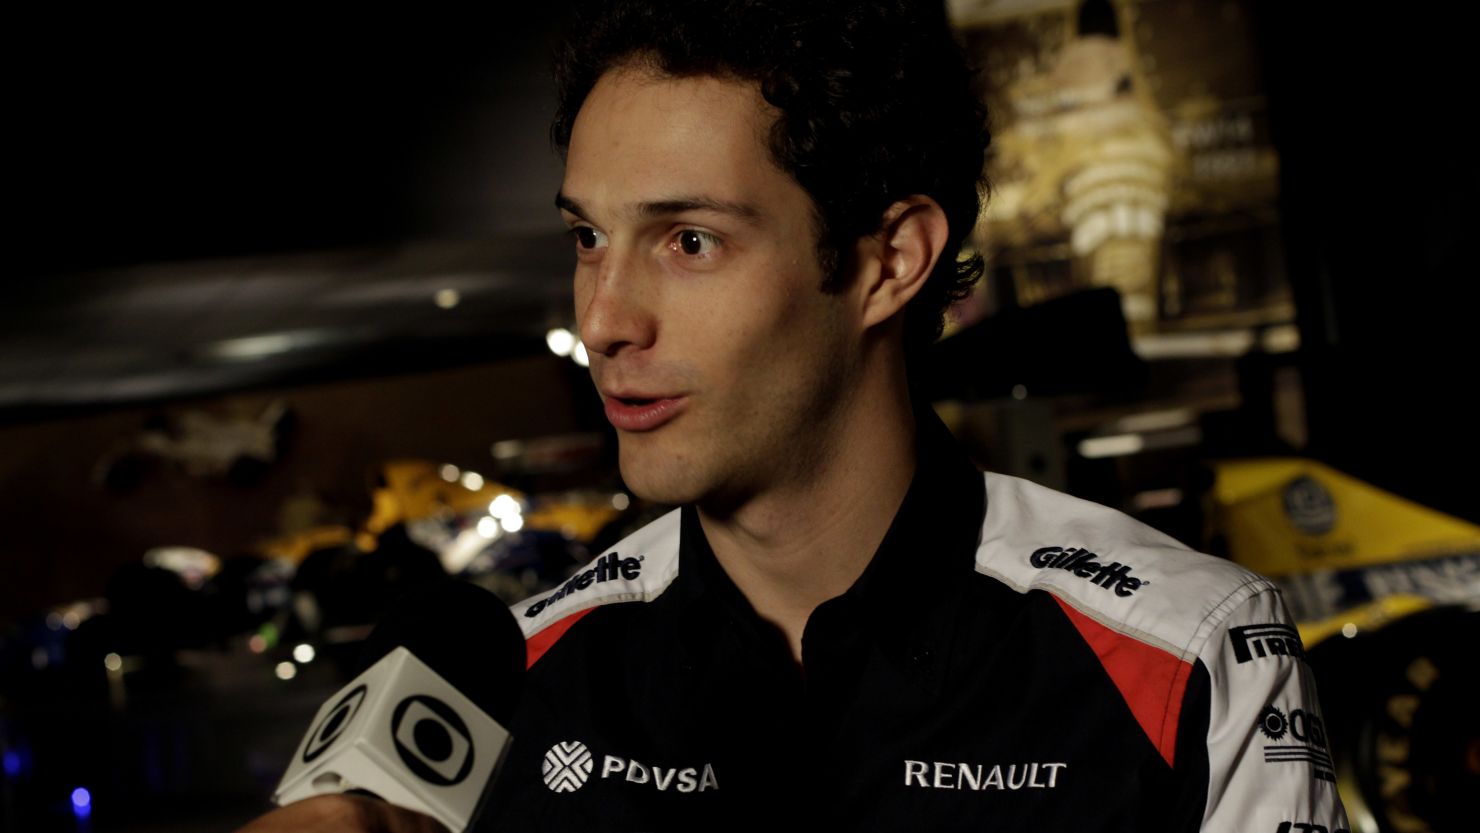 Bruno Senna will drive for Williams in the 2012 Formula One season.